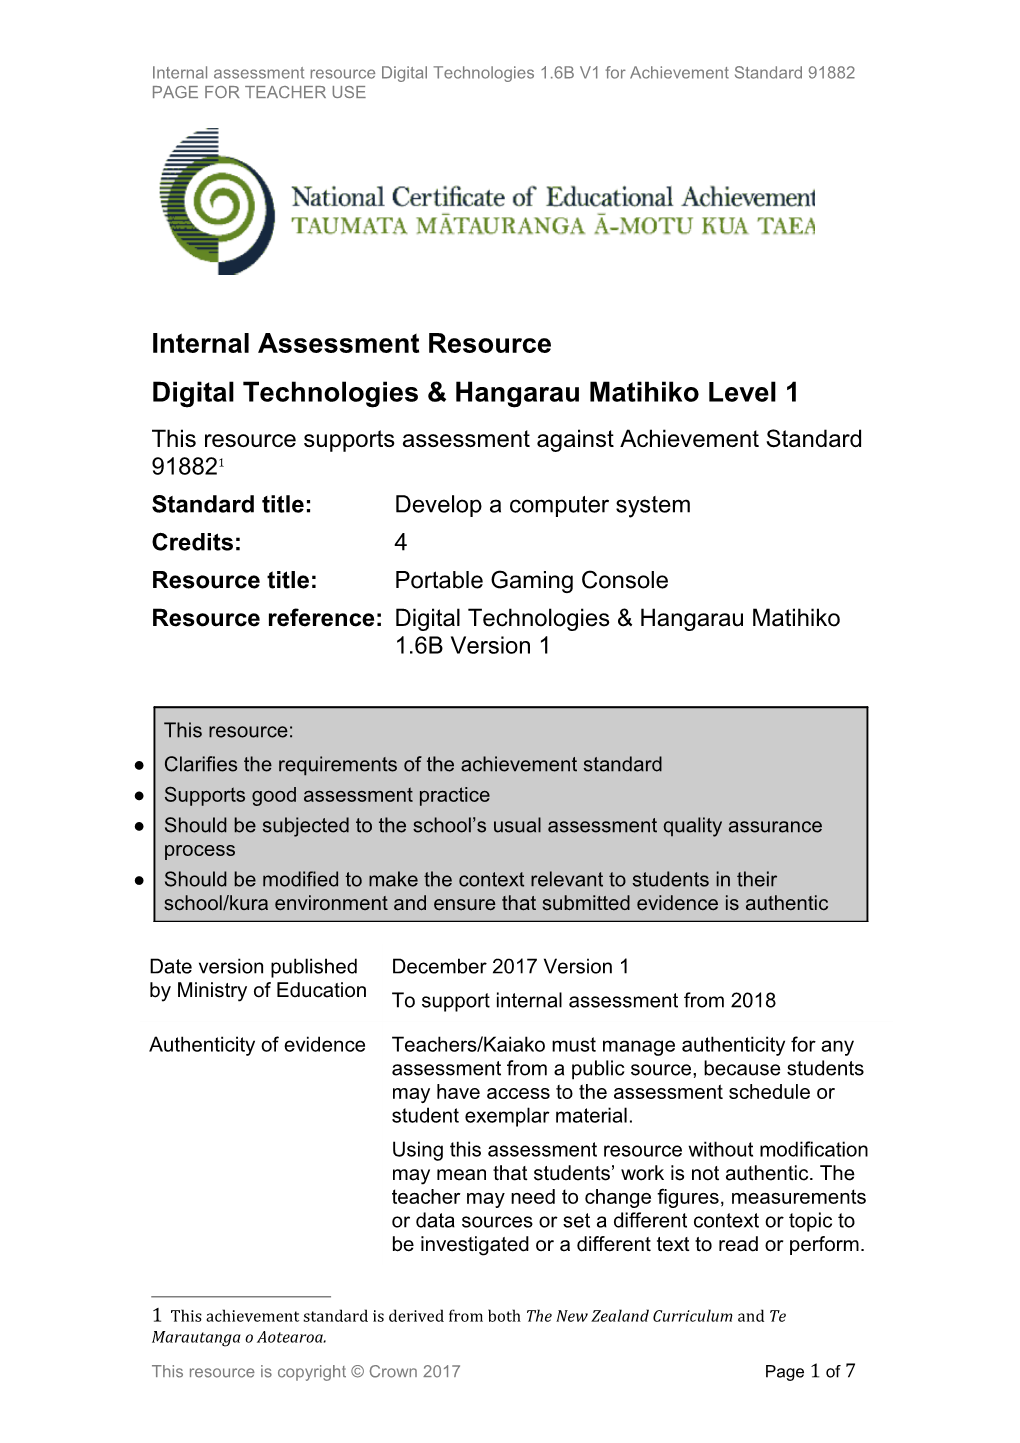 DT HM Level 1 Internal Assessment Resource